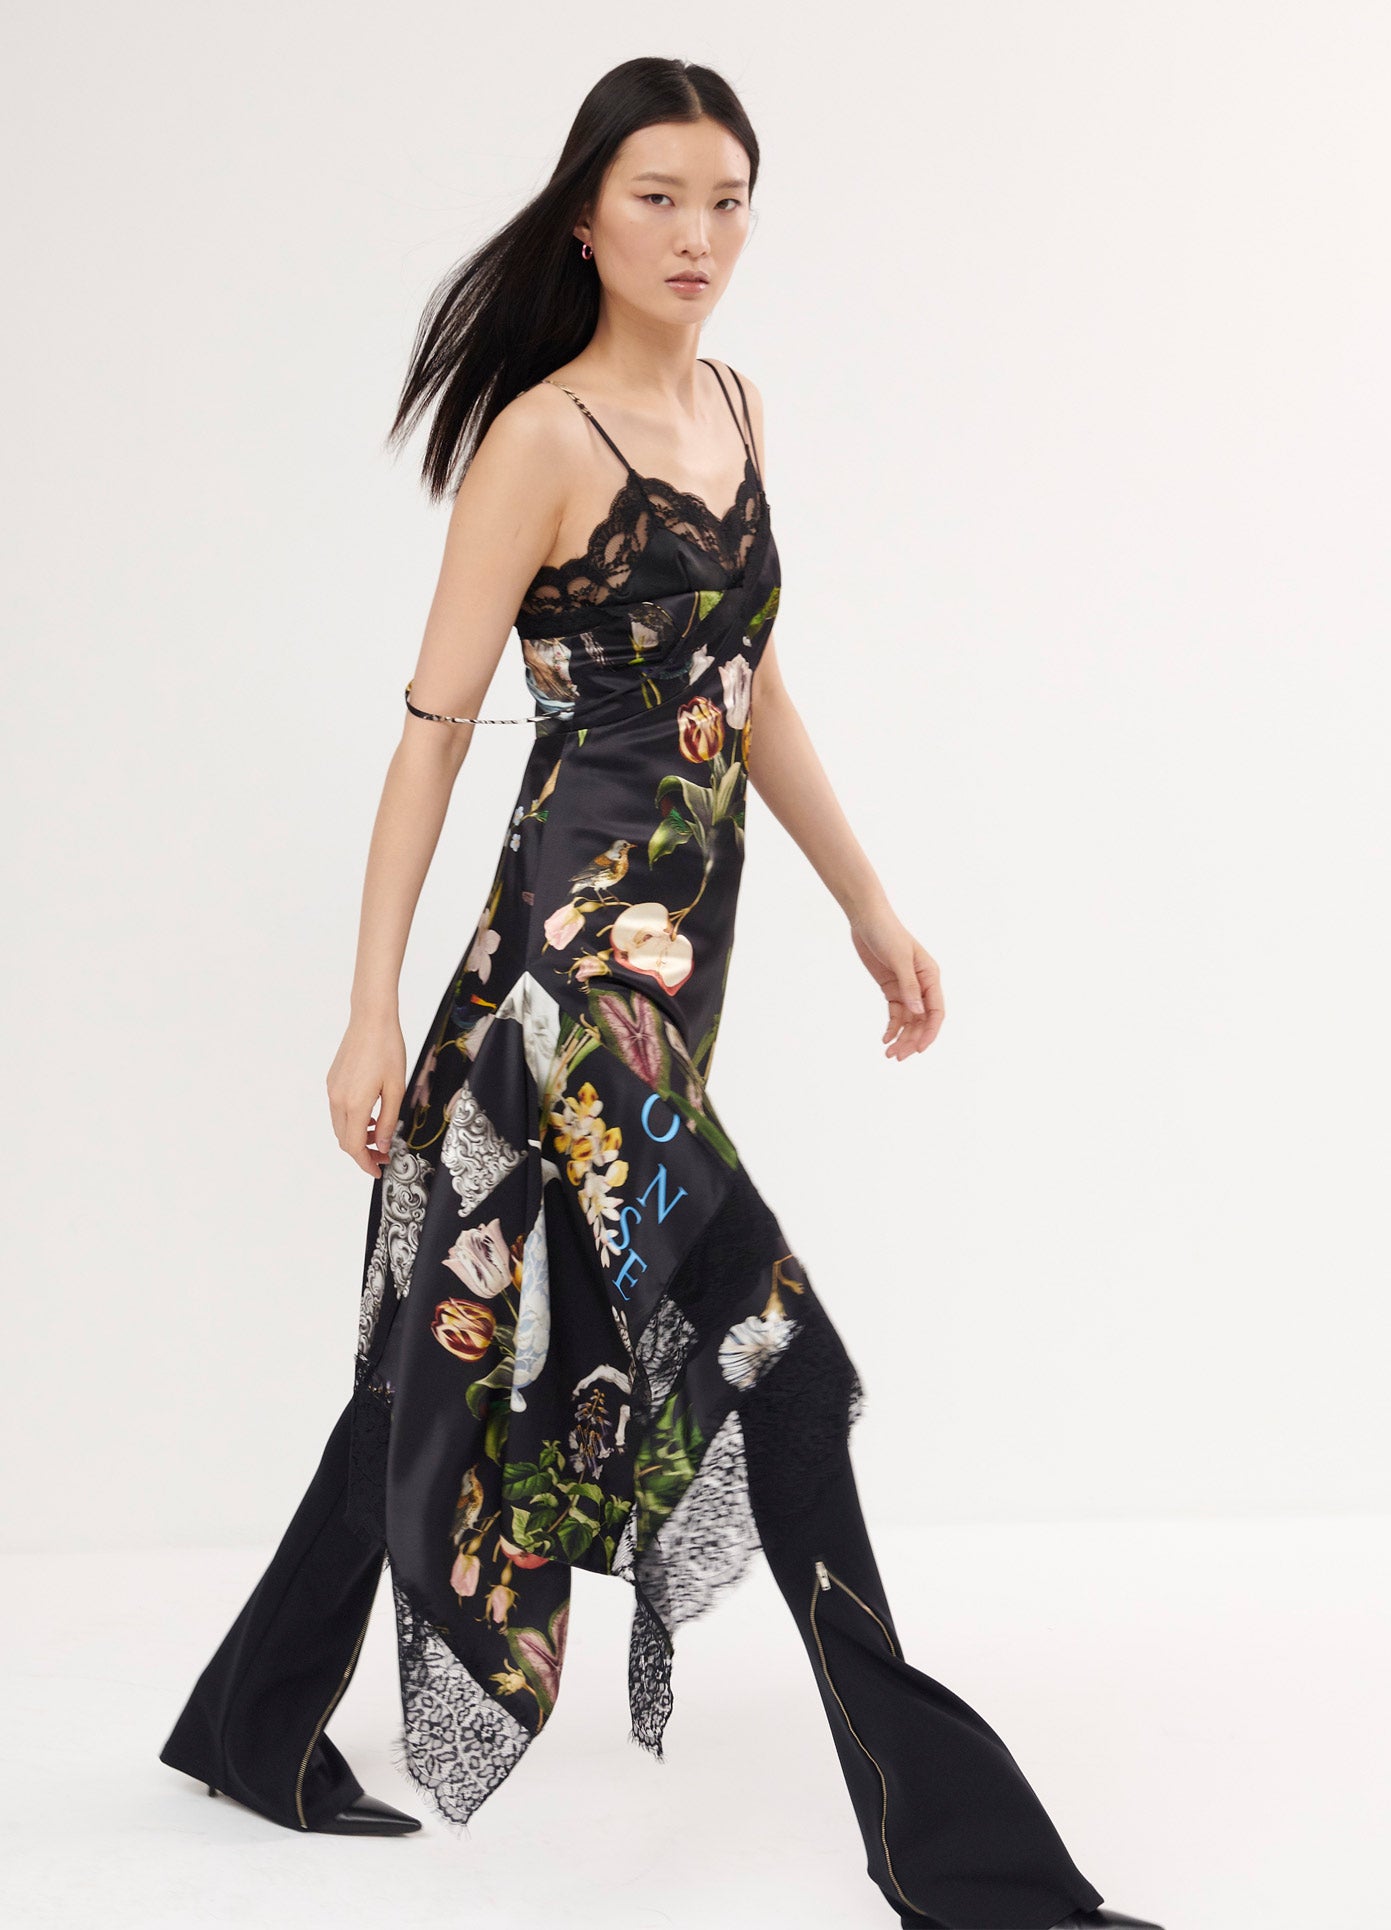 MONSE Print Lace Slip Dress in Black Multi on Model Walking Front View